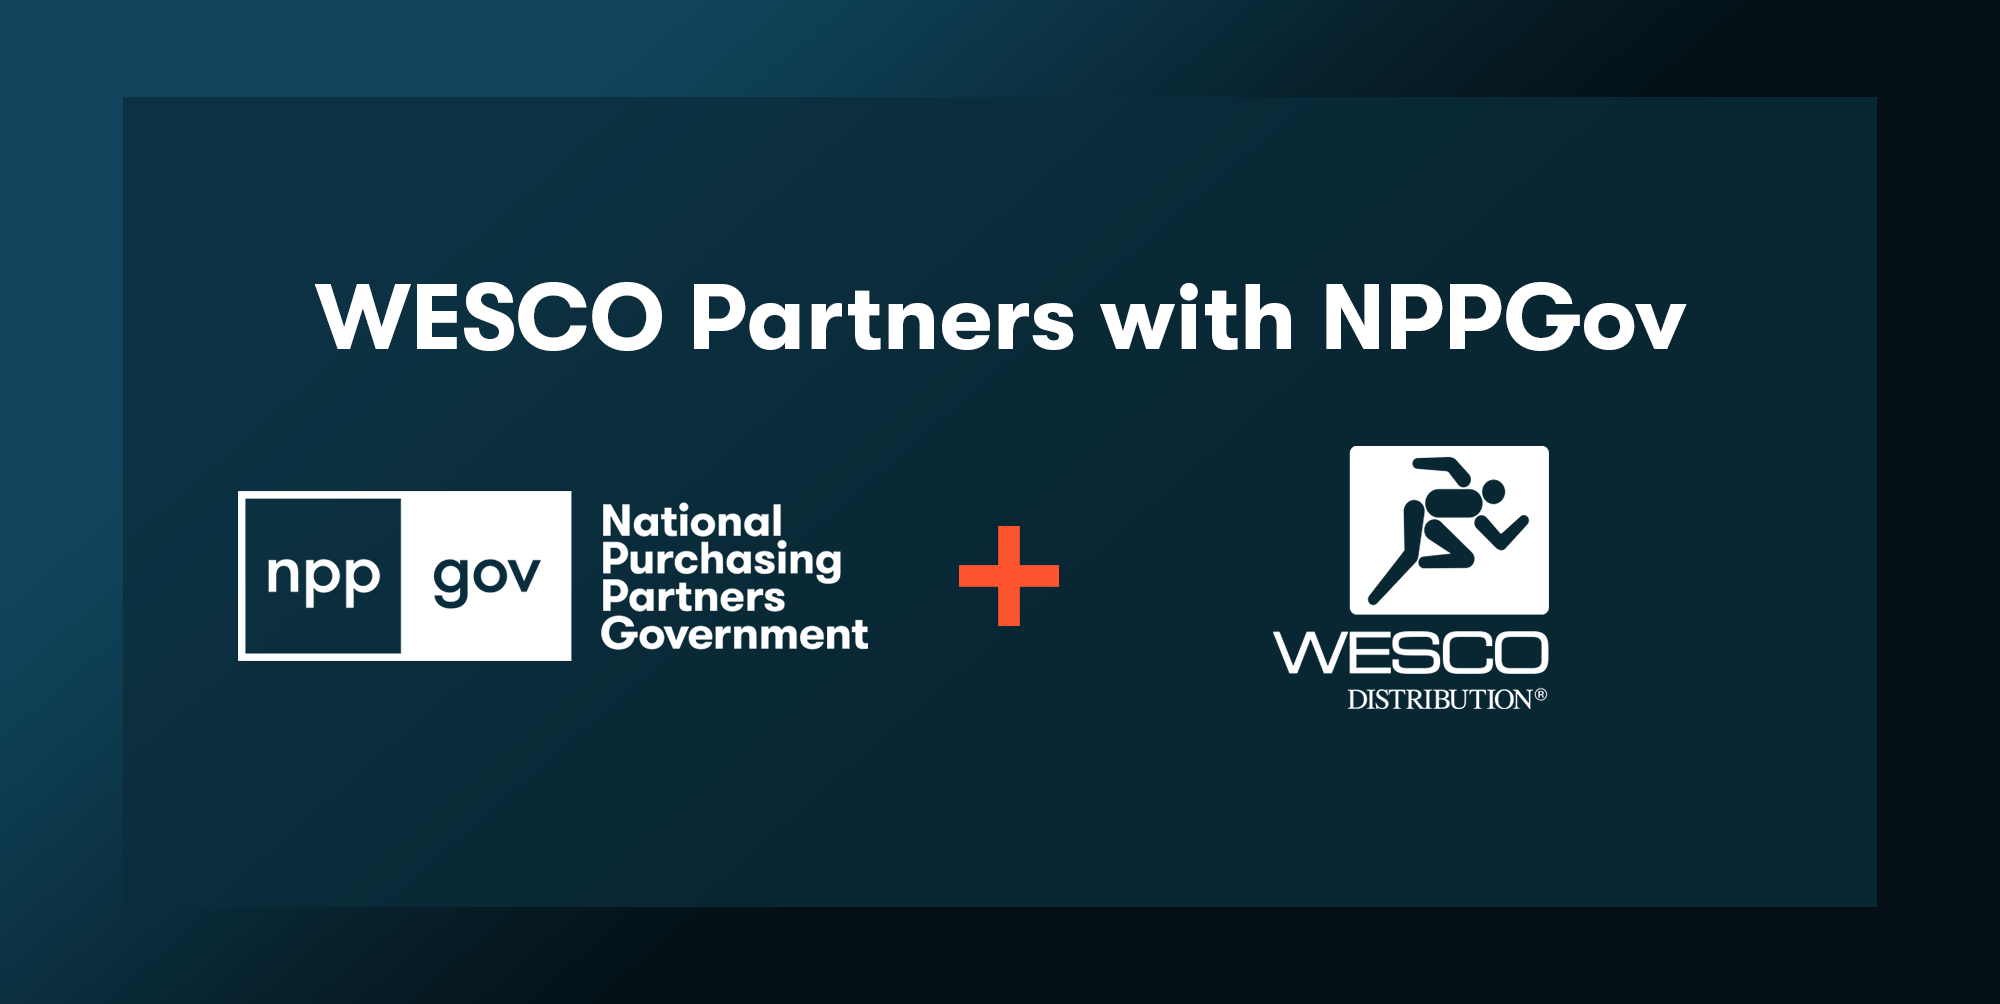 WESCO Partners with NPPGov